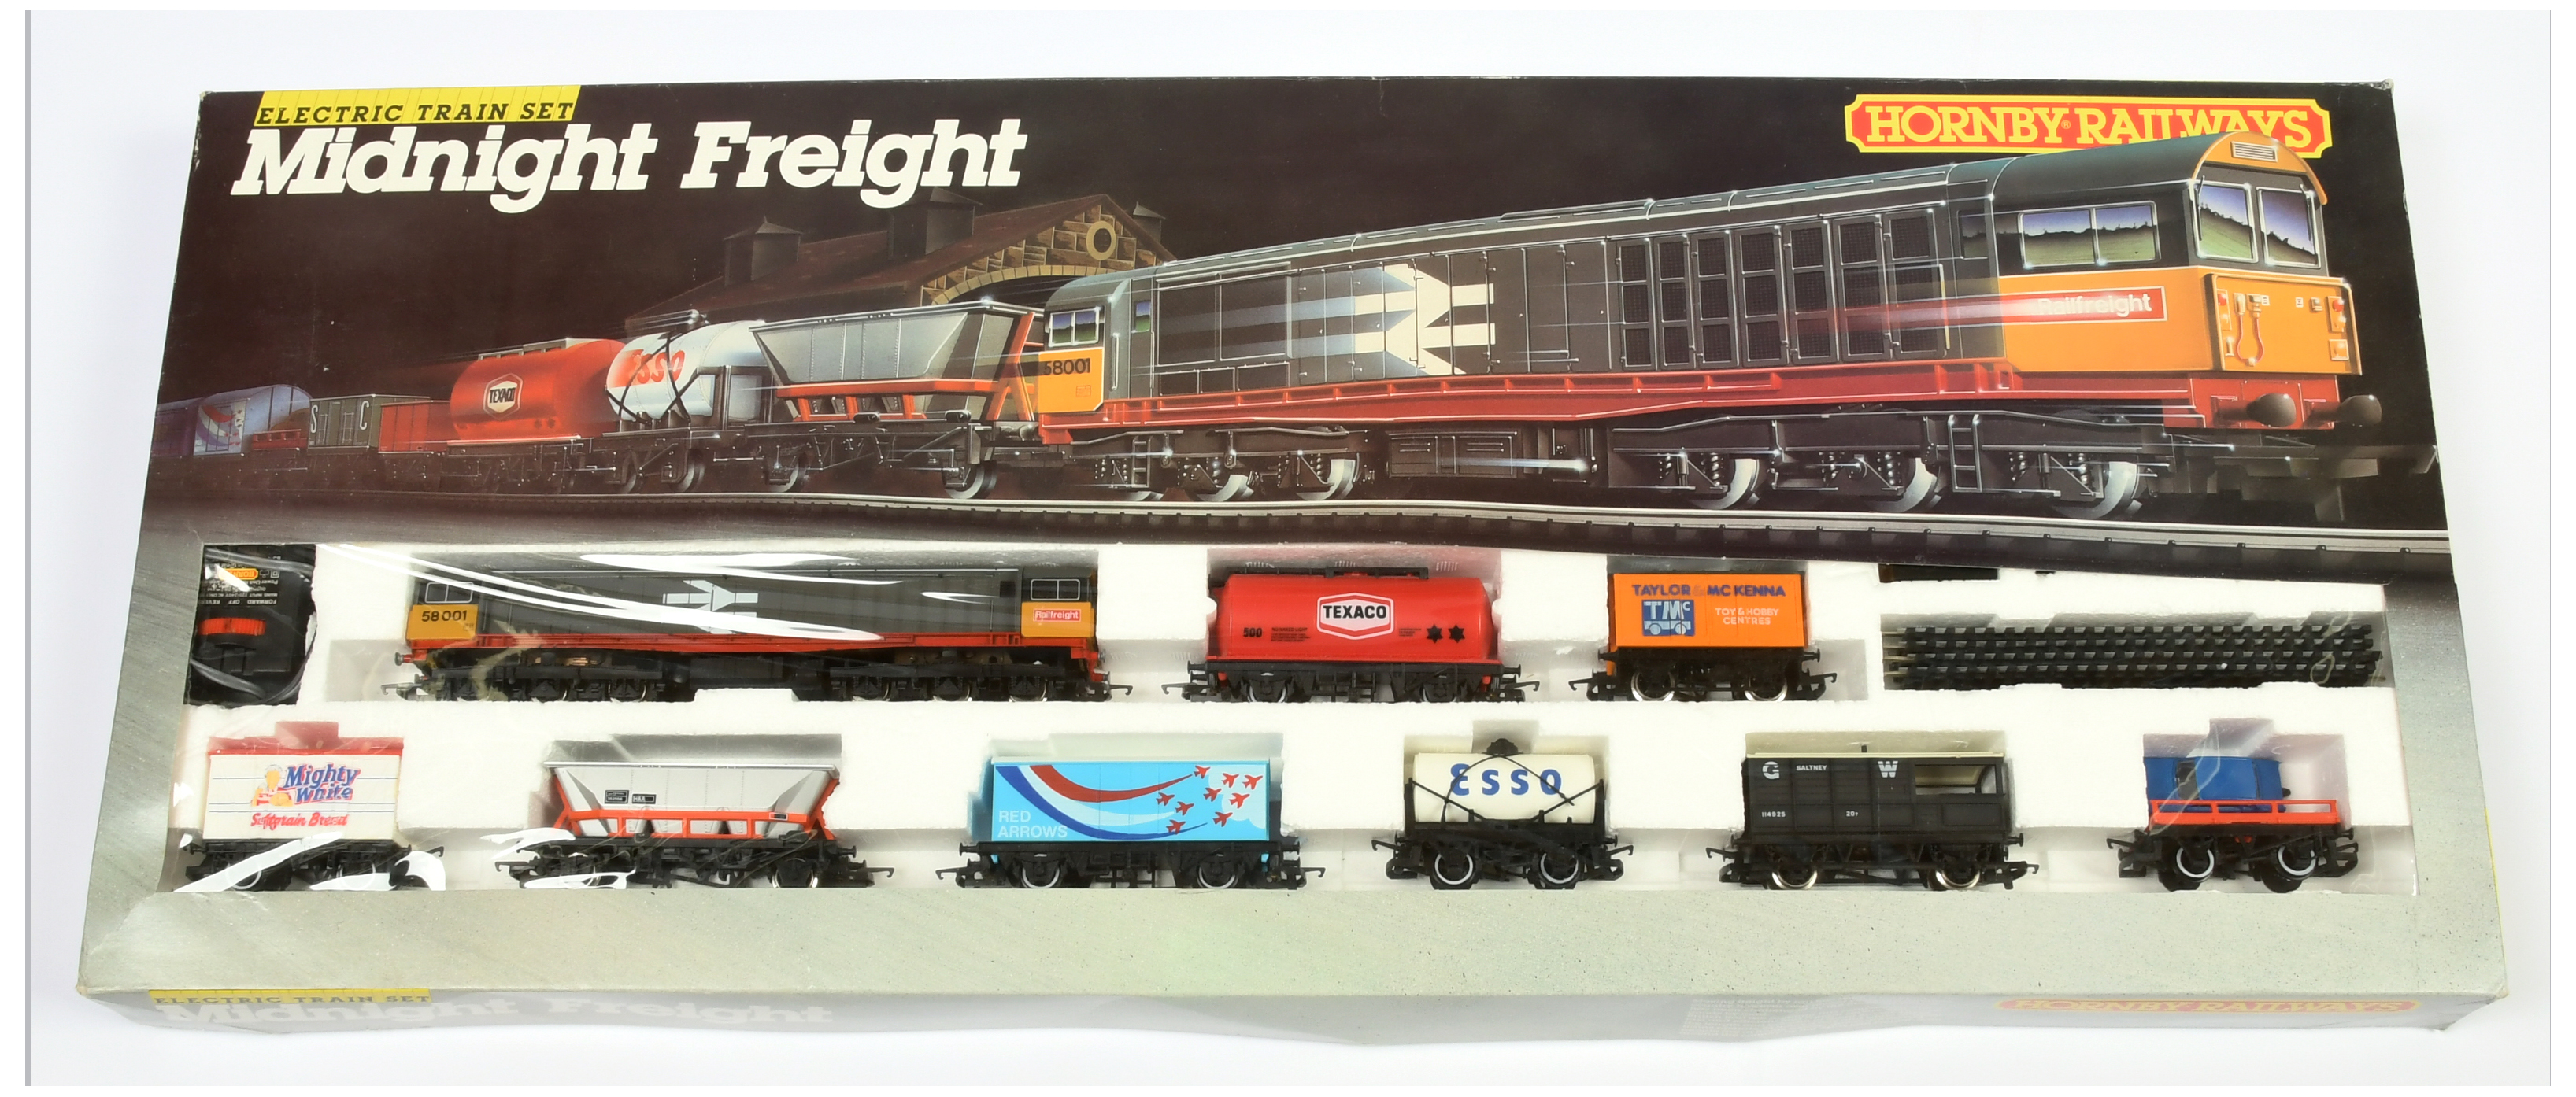 Hornby Railways OO Gauge R674 "Midnight Freight" Train Set  - Image 2 of 2